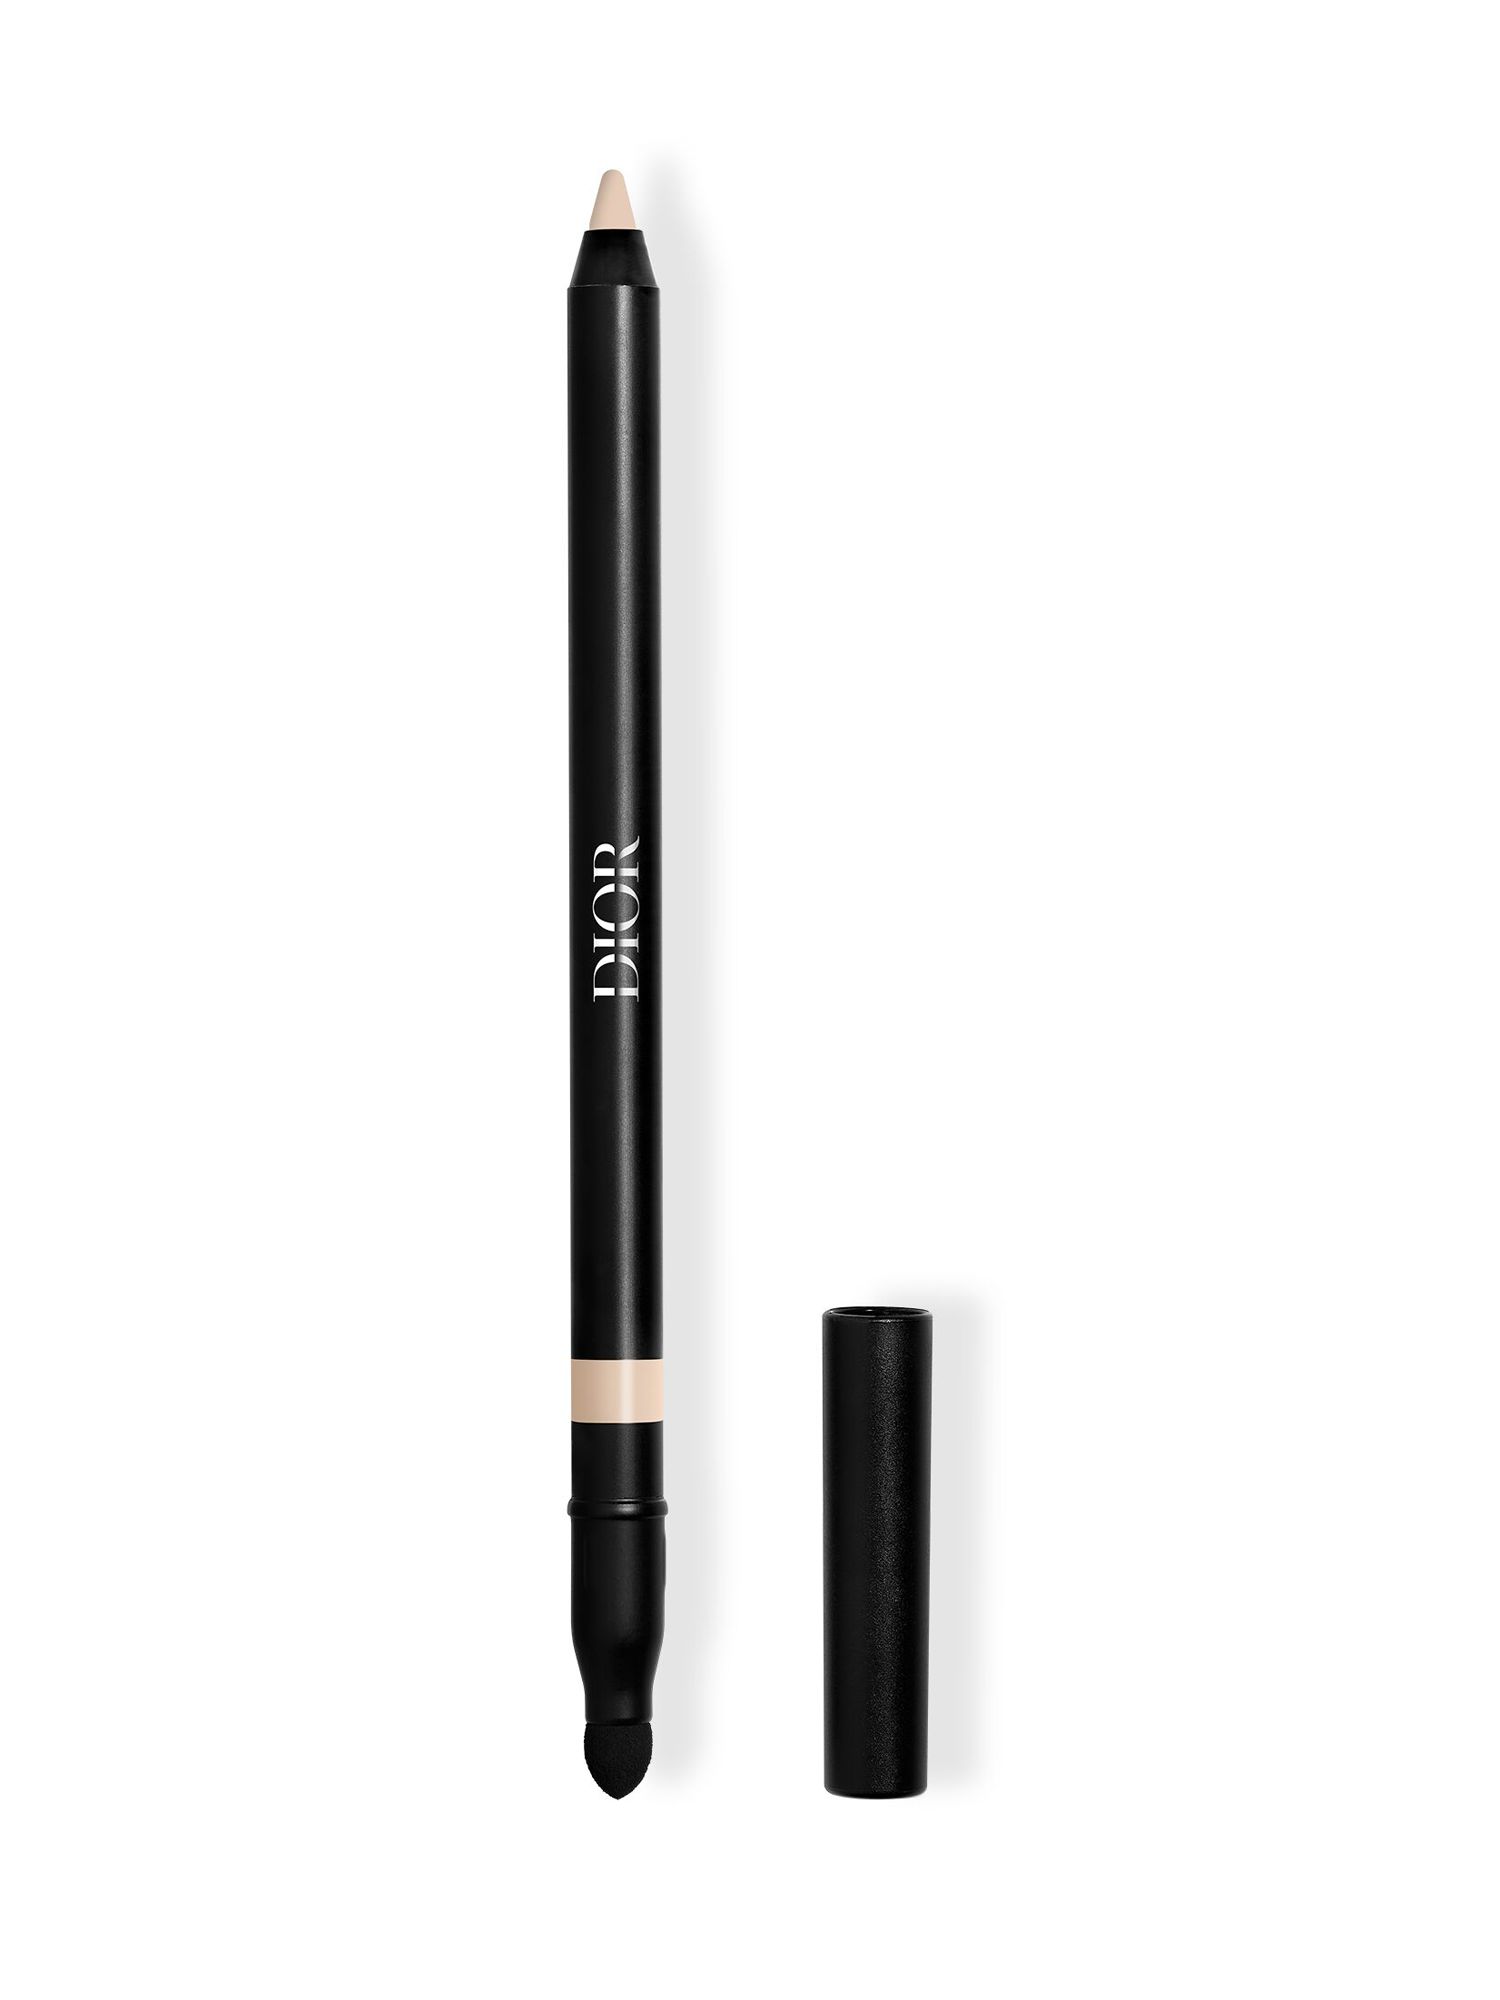 Chanel Black Eyeliner Pen Stylo Eye Liner Intense longwear 10 Noir Brand  New - Compare Prices & Where To Buy 